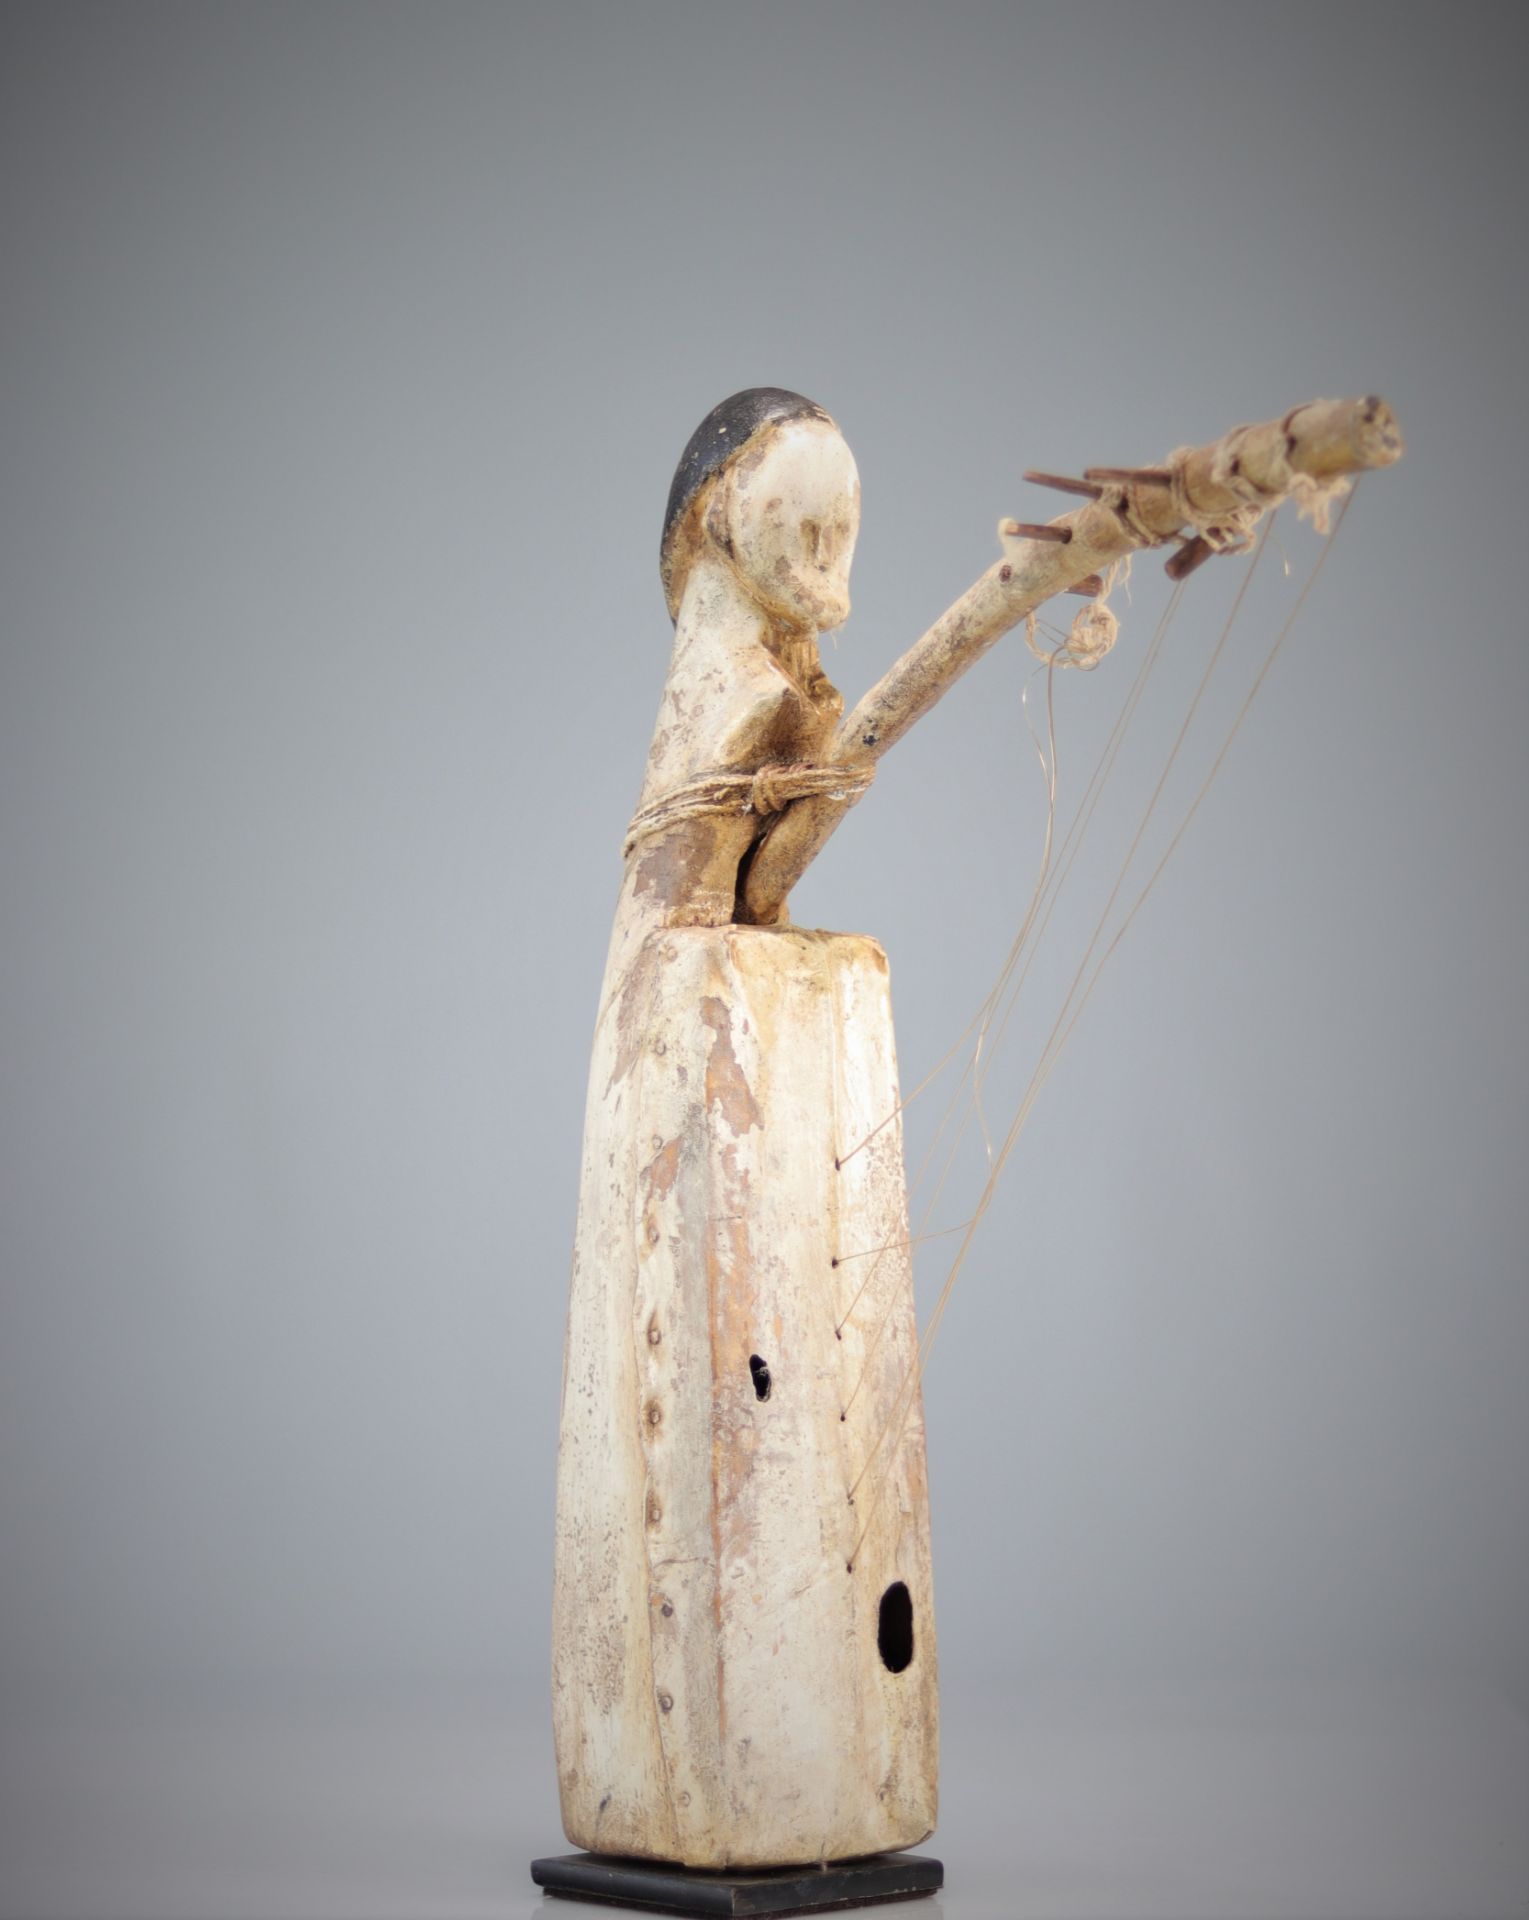 Fang harp from Gabon surmounted by a head